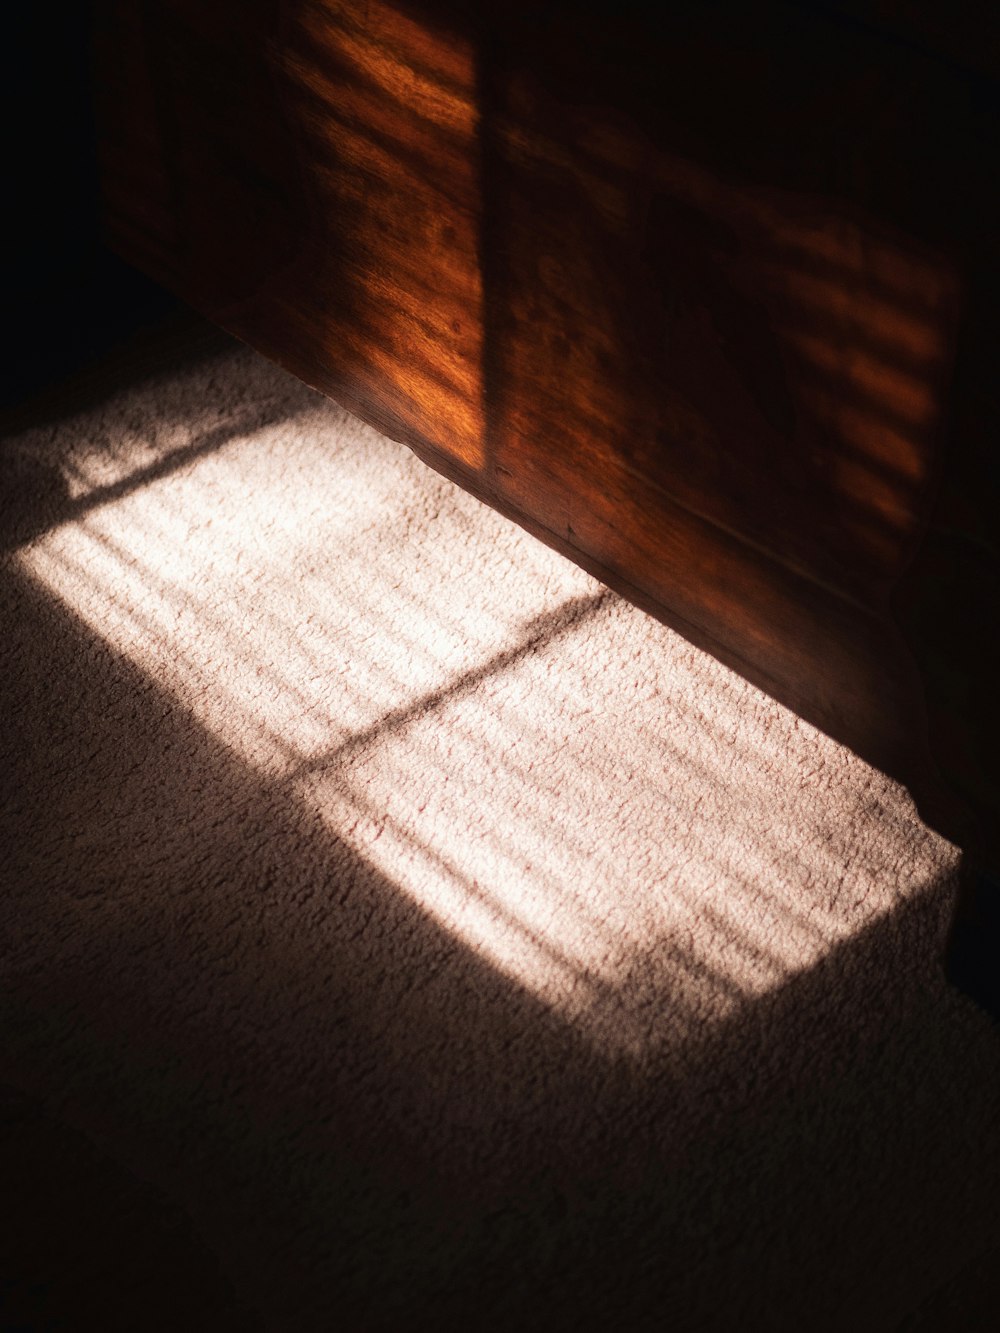 the sunlight is shining through the window onto the floor